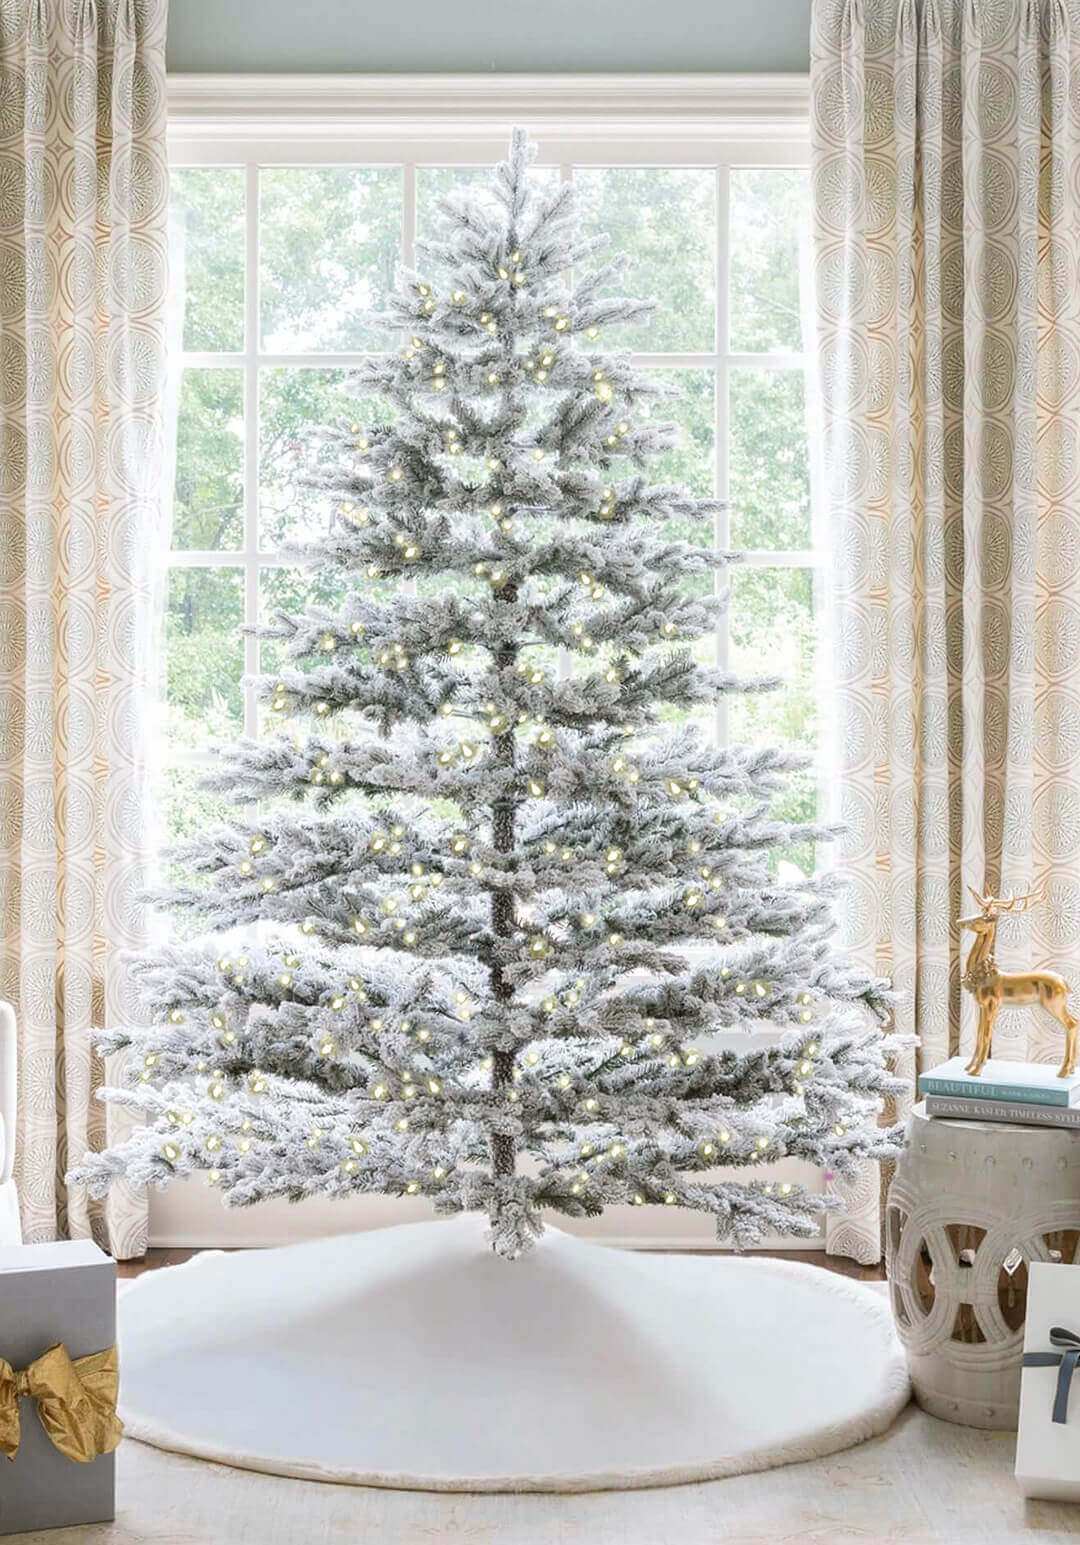 King of Christmas 9' Rushmore Flock Quick-Shape Tree 1000 Warm White Led Lights